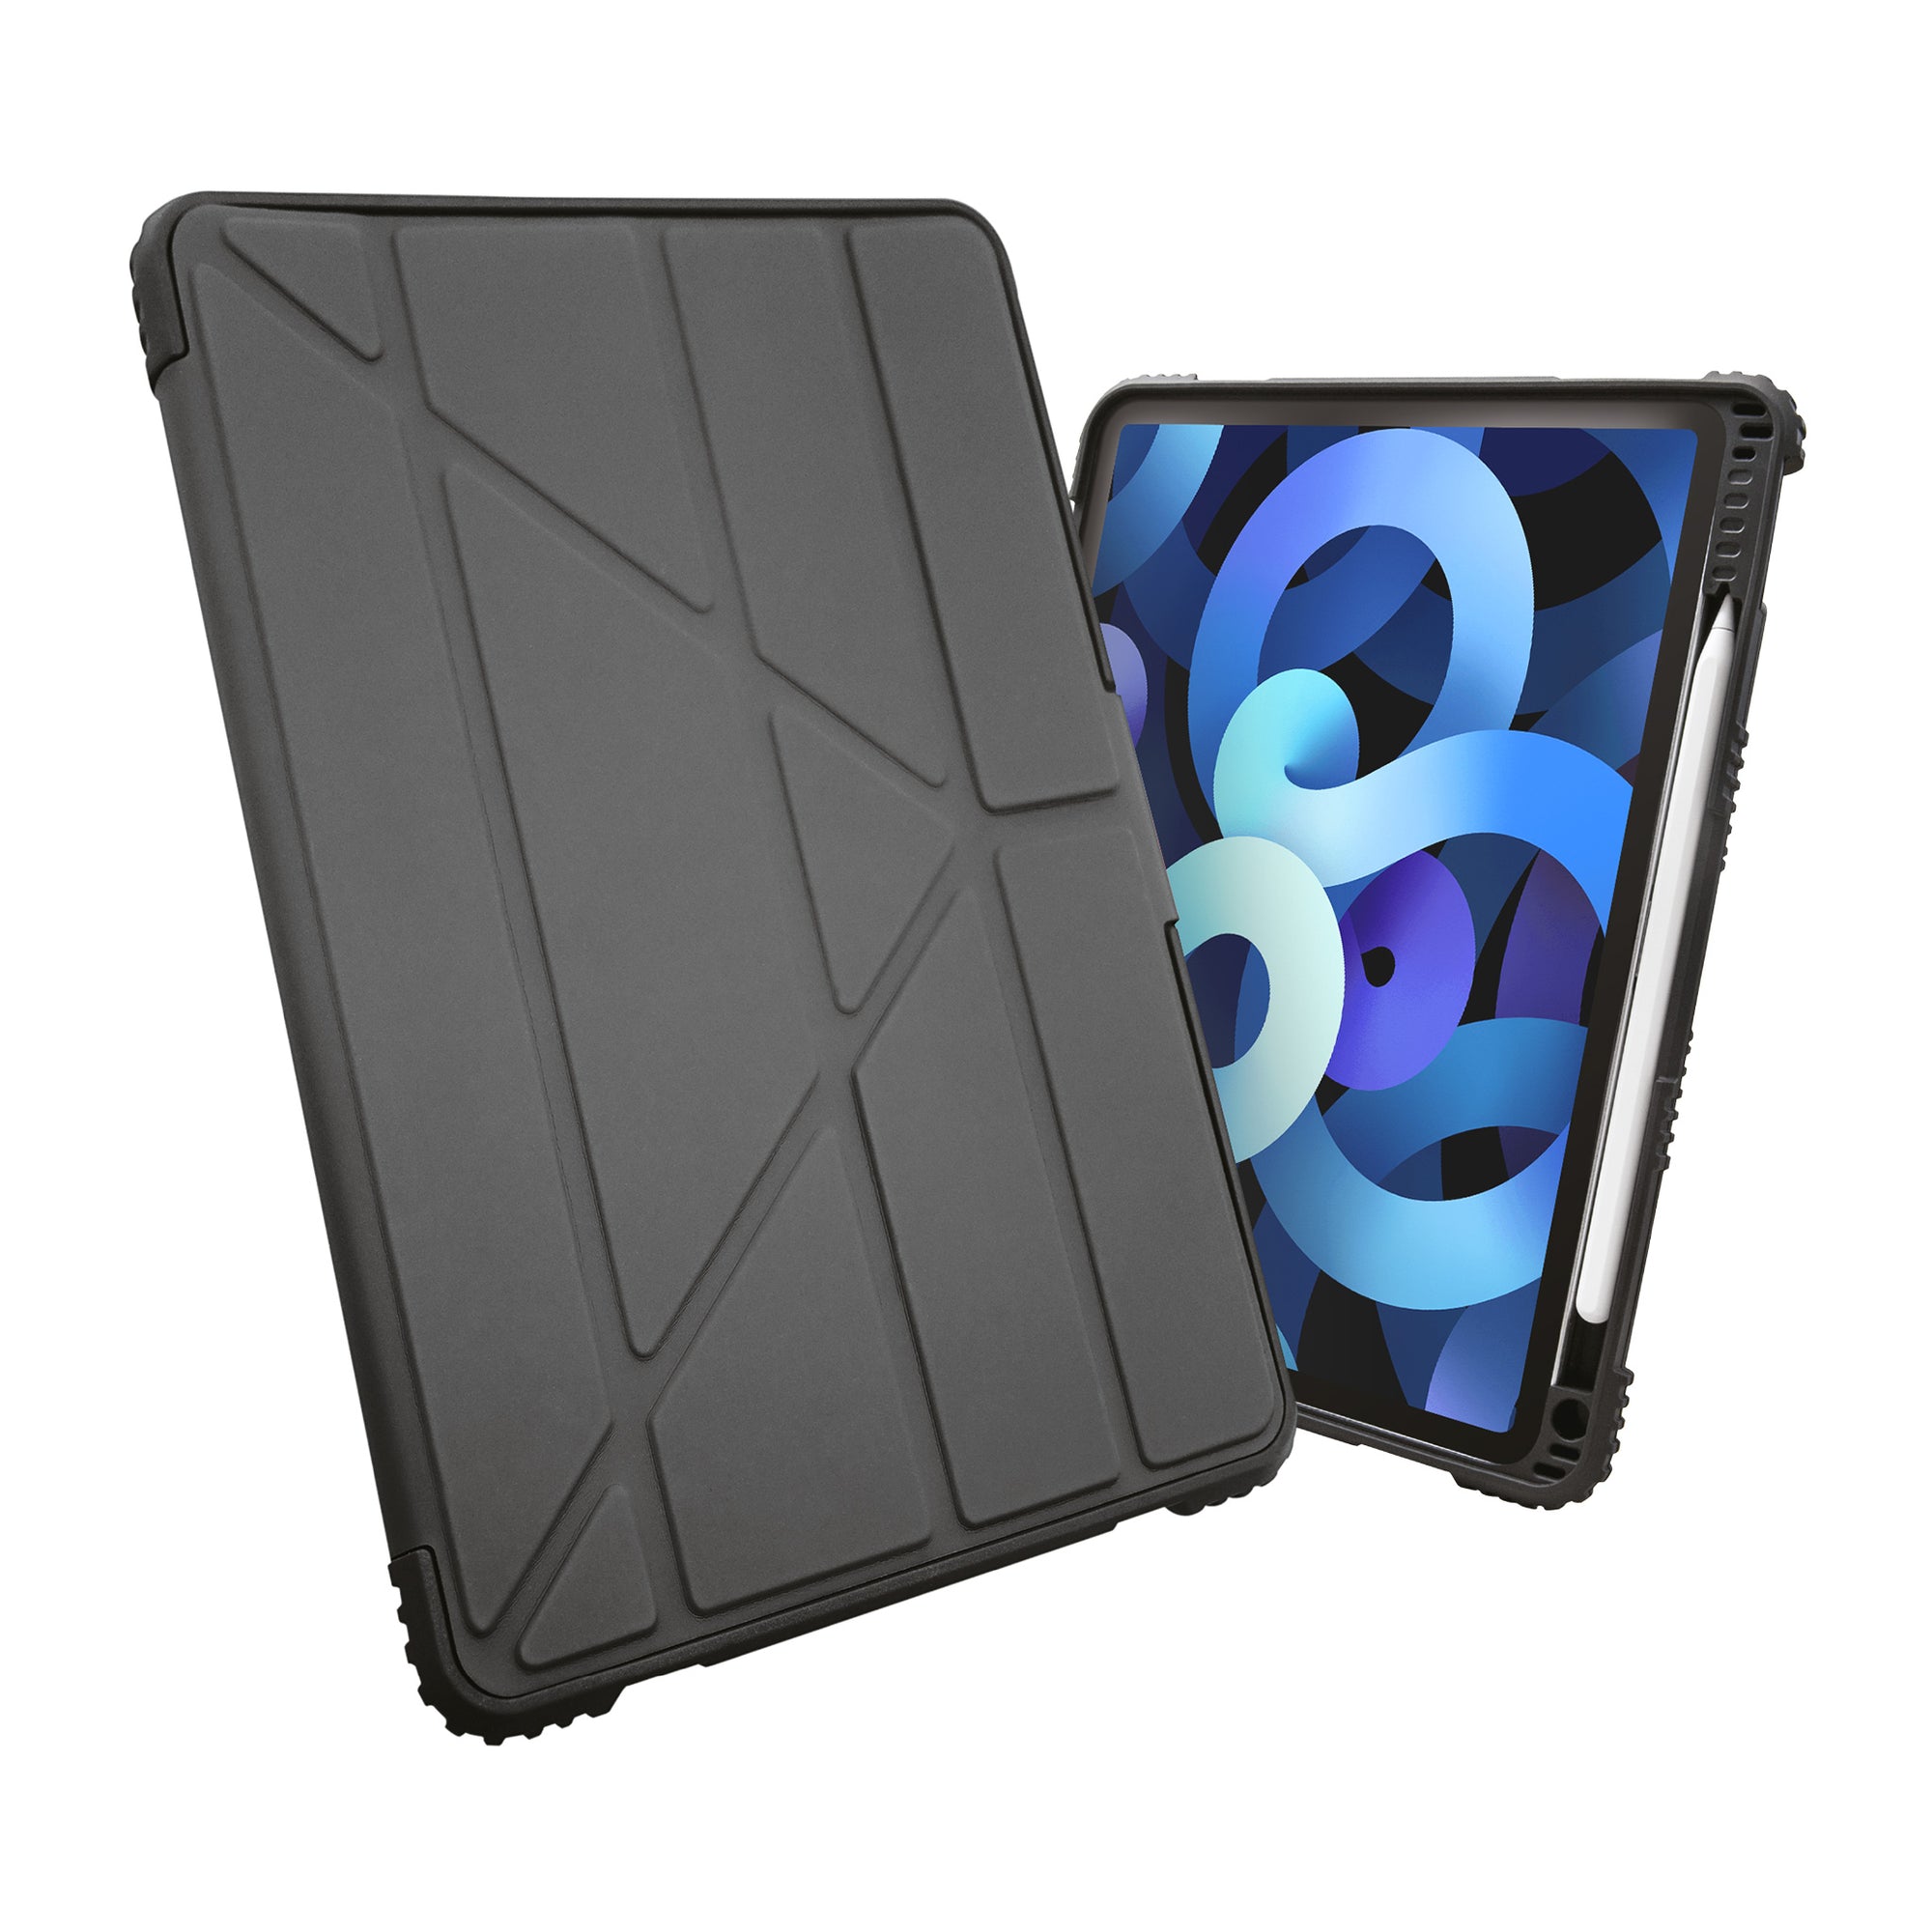 CAPDASE iPad tough protection flip case